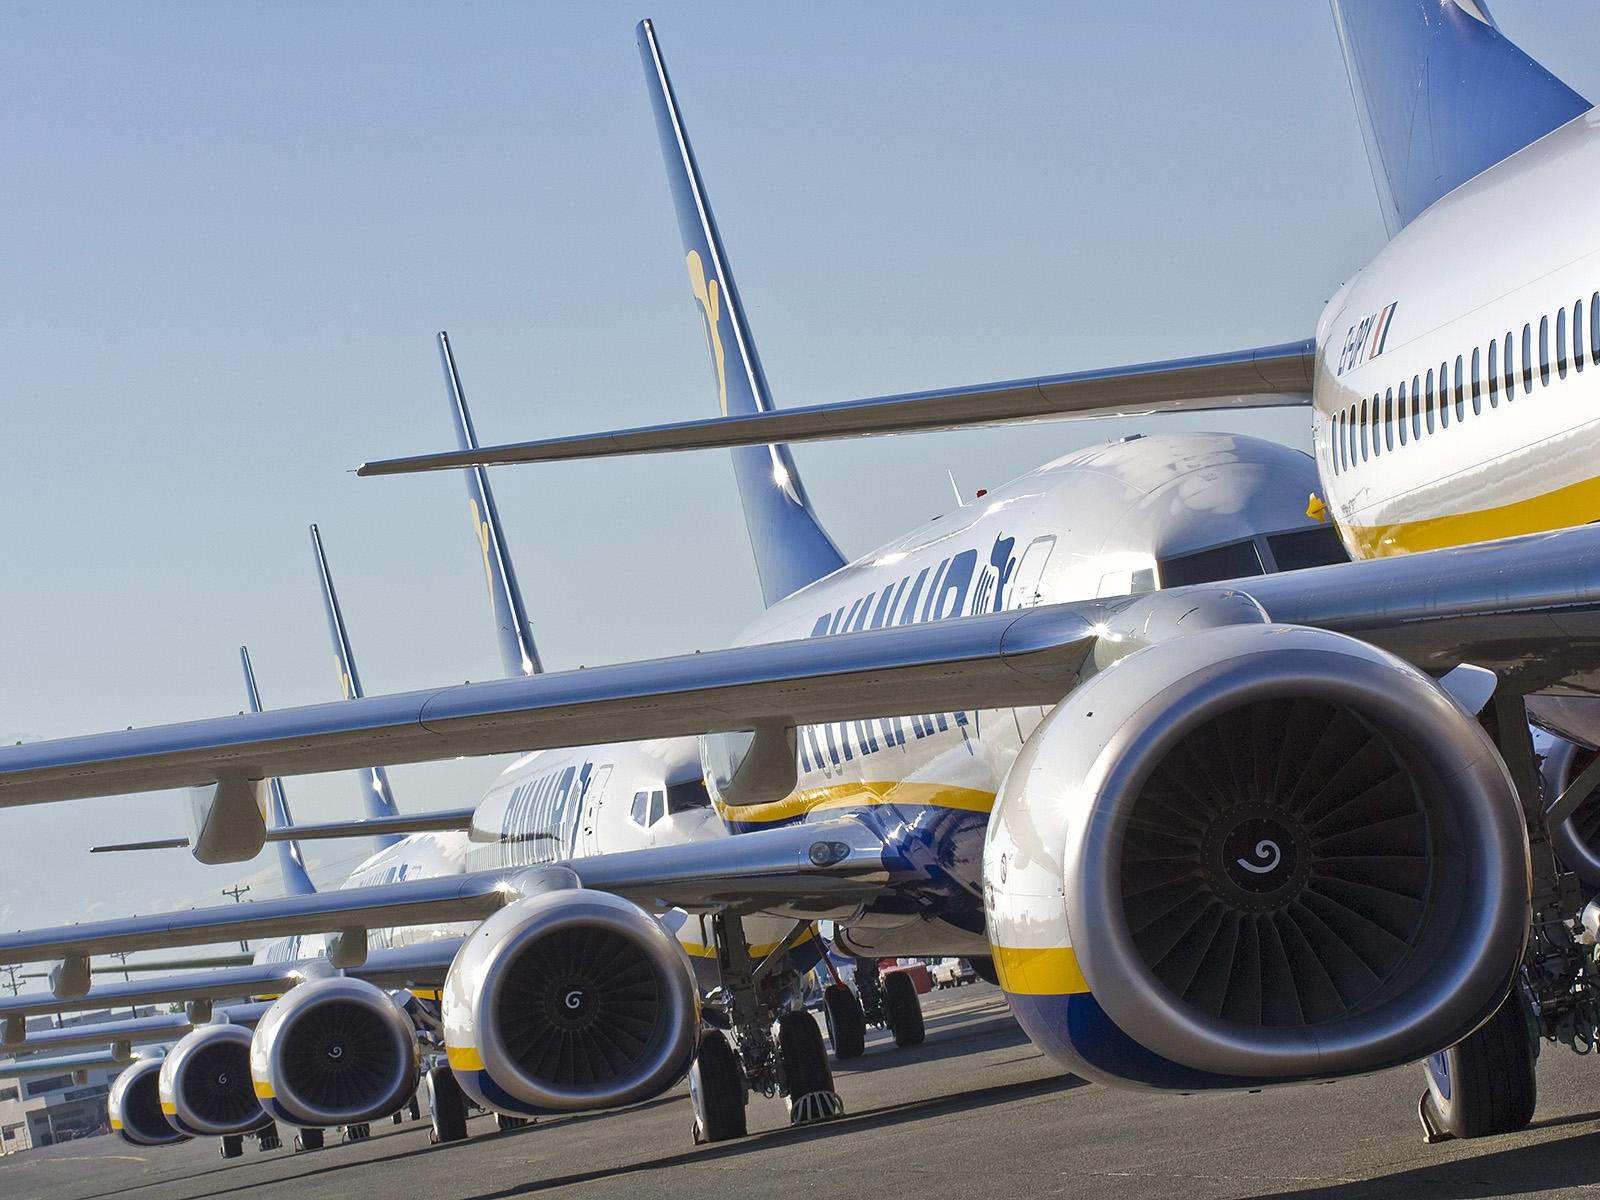 Ryanair Celebra La Semana Santa Lanzando Vuelos Por Menos De 10 Euros